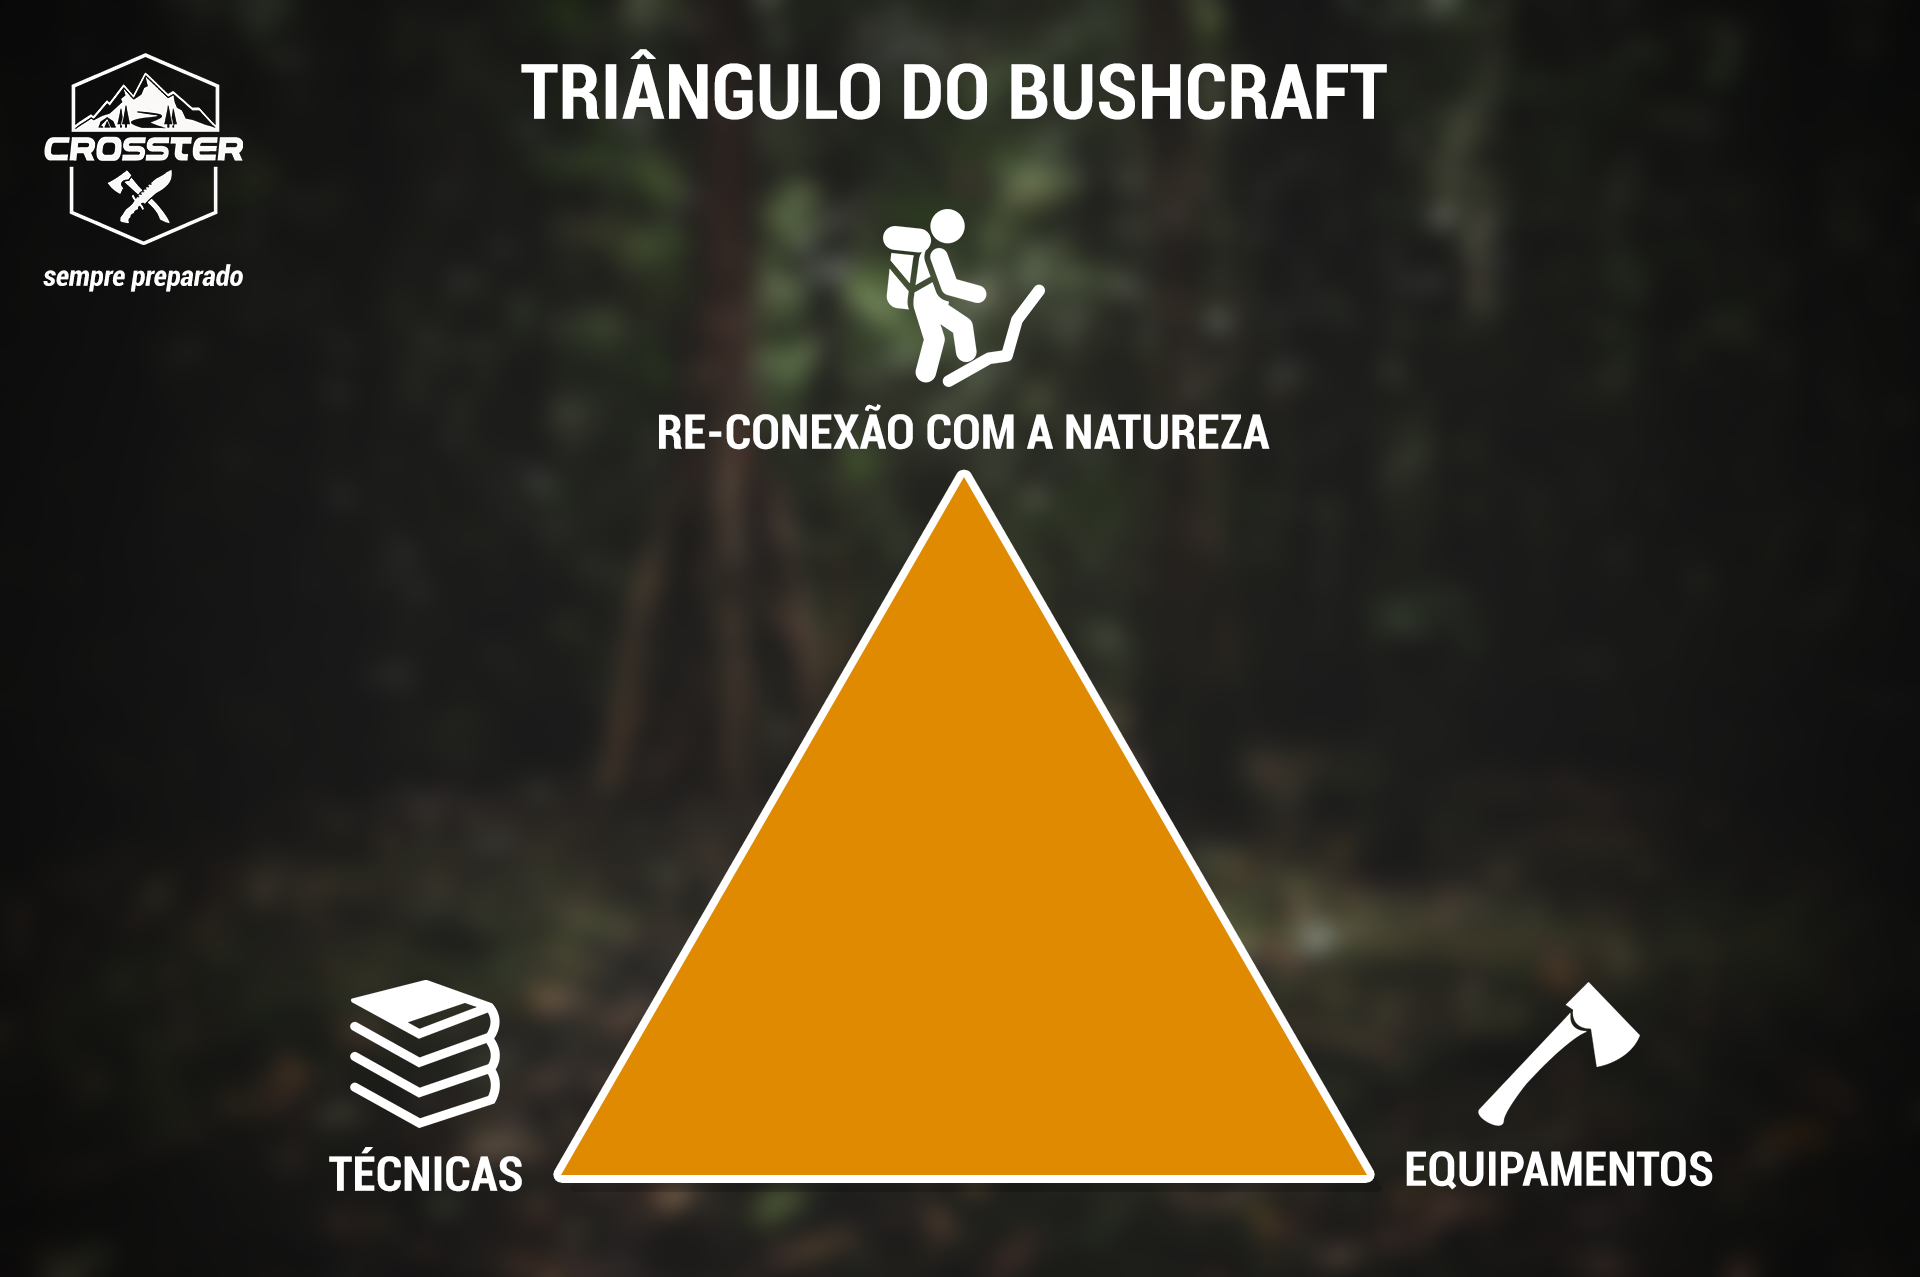 triangulo-bushcraft-re-conexao-natureza